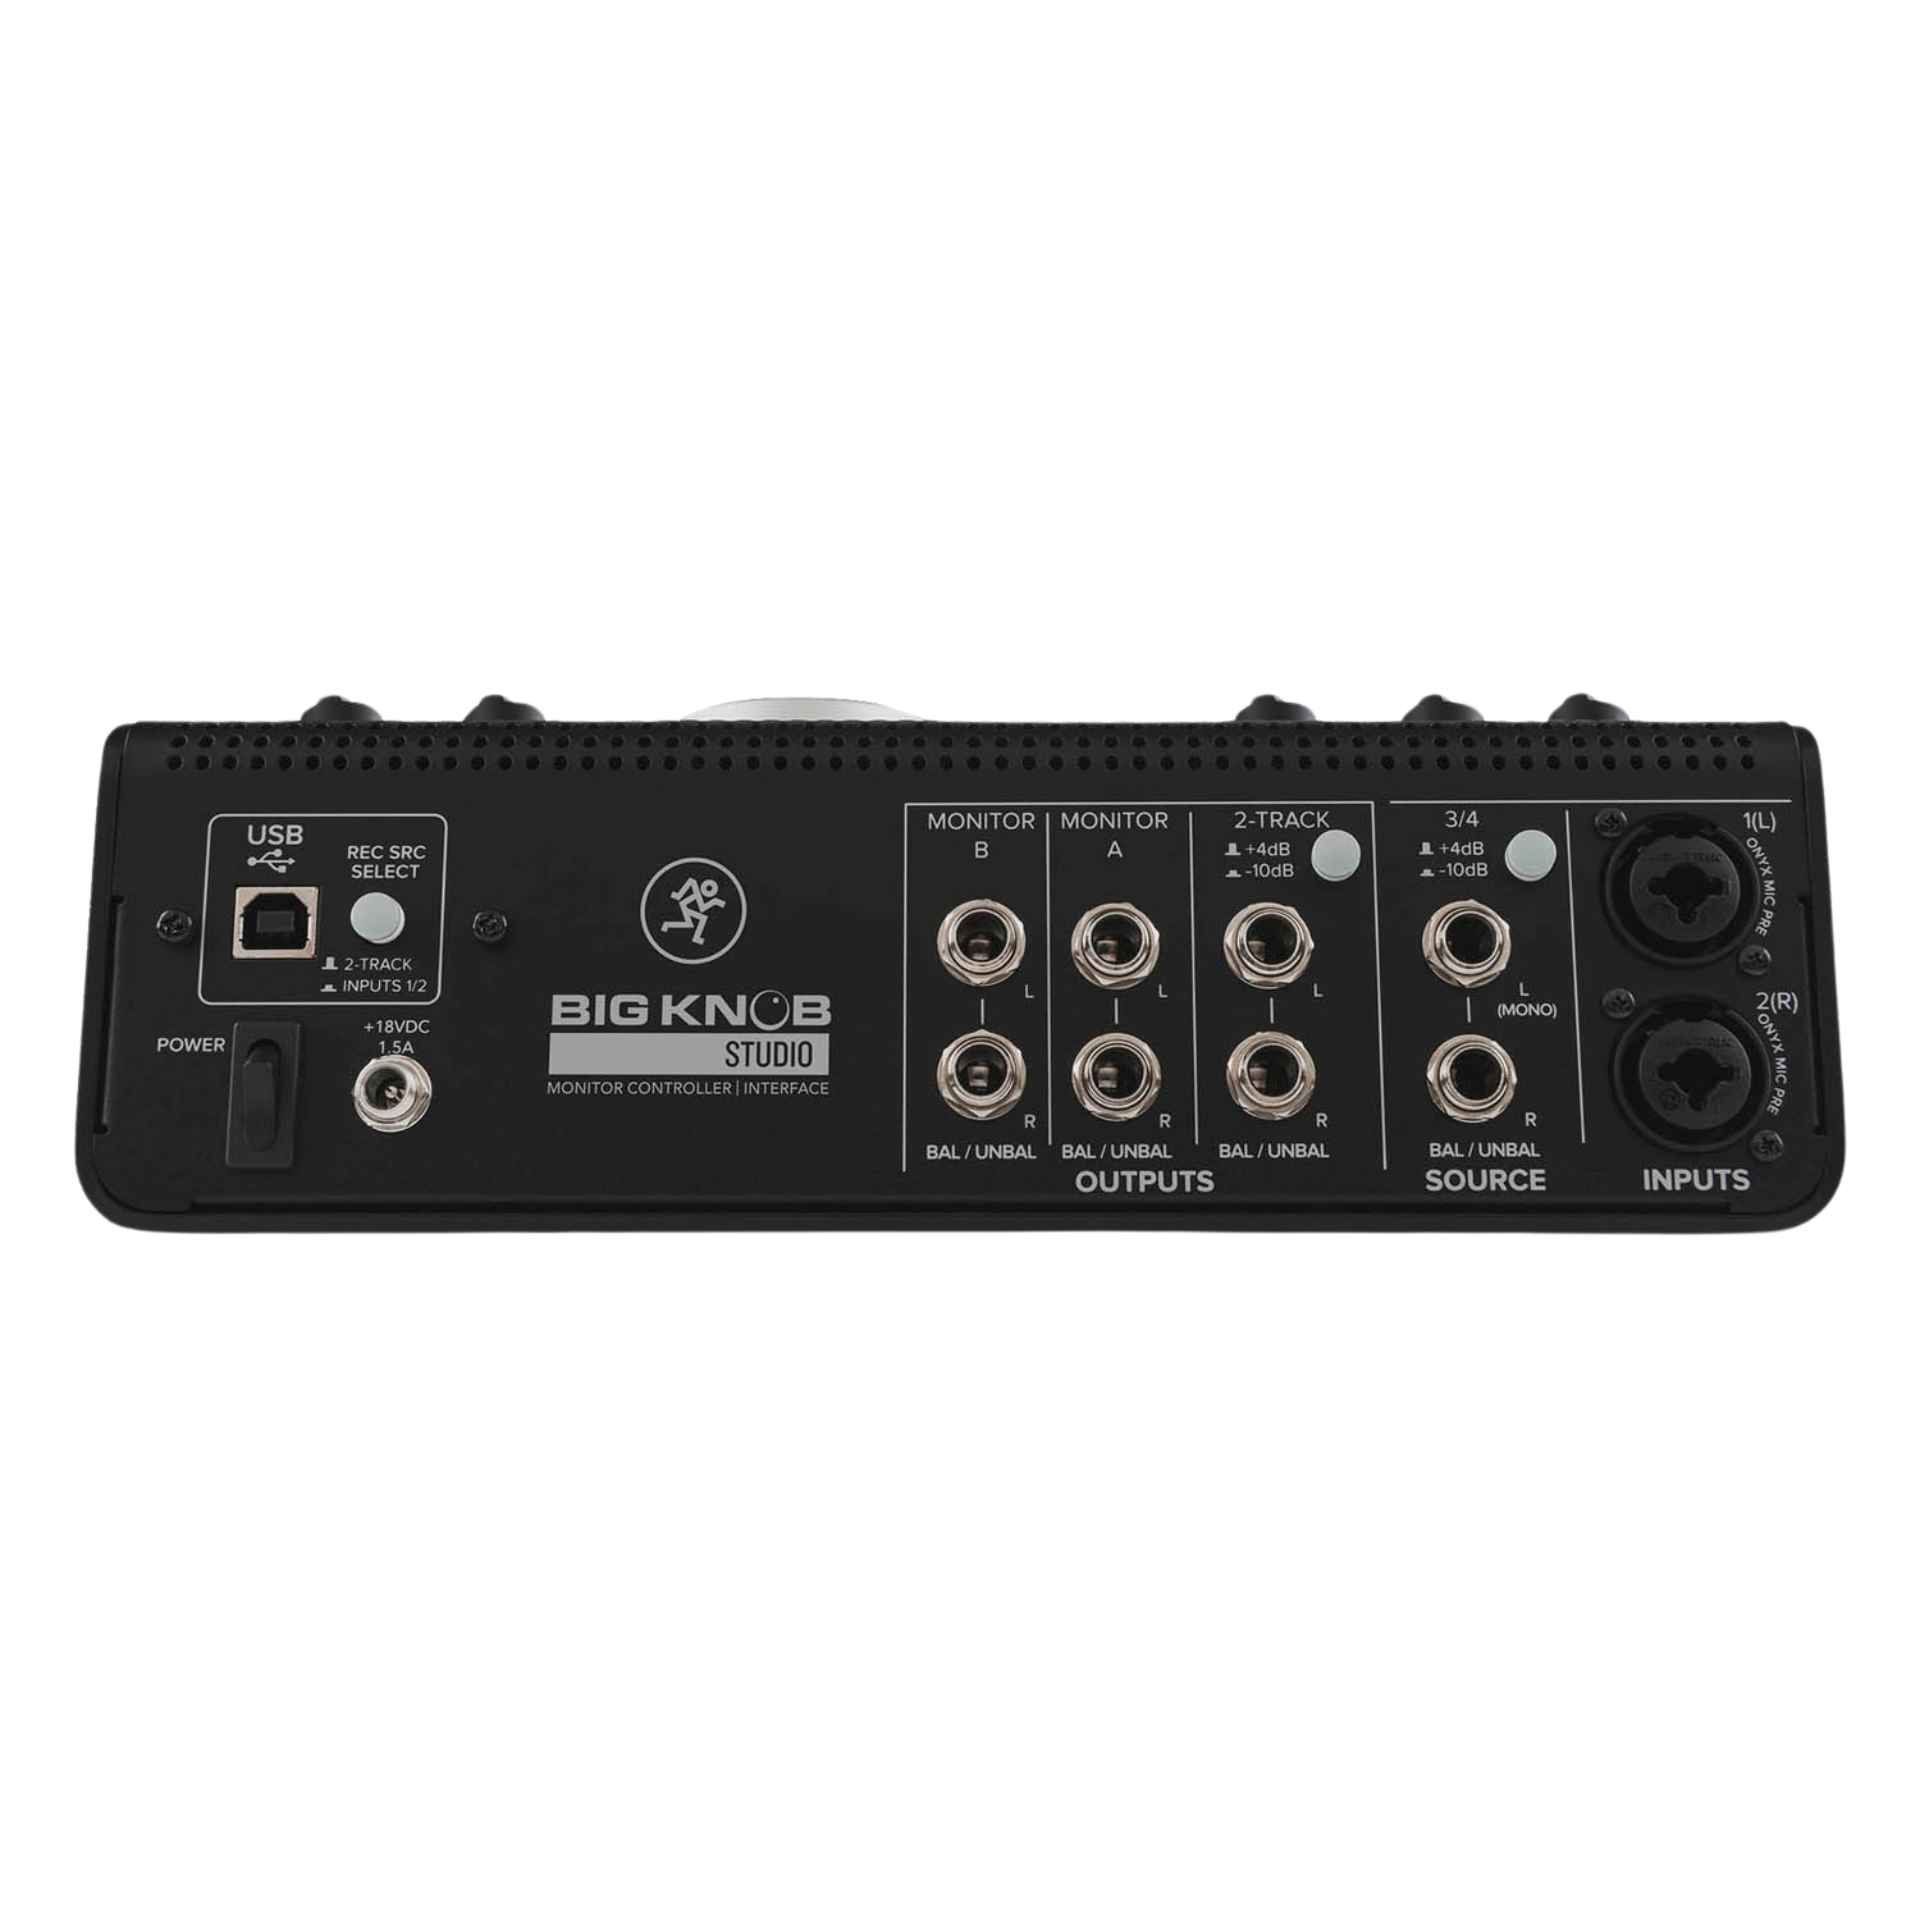 MackieBig Knob Studio+ monitor controller and audio interface